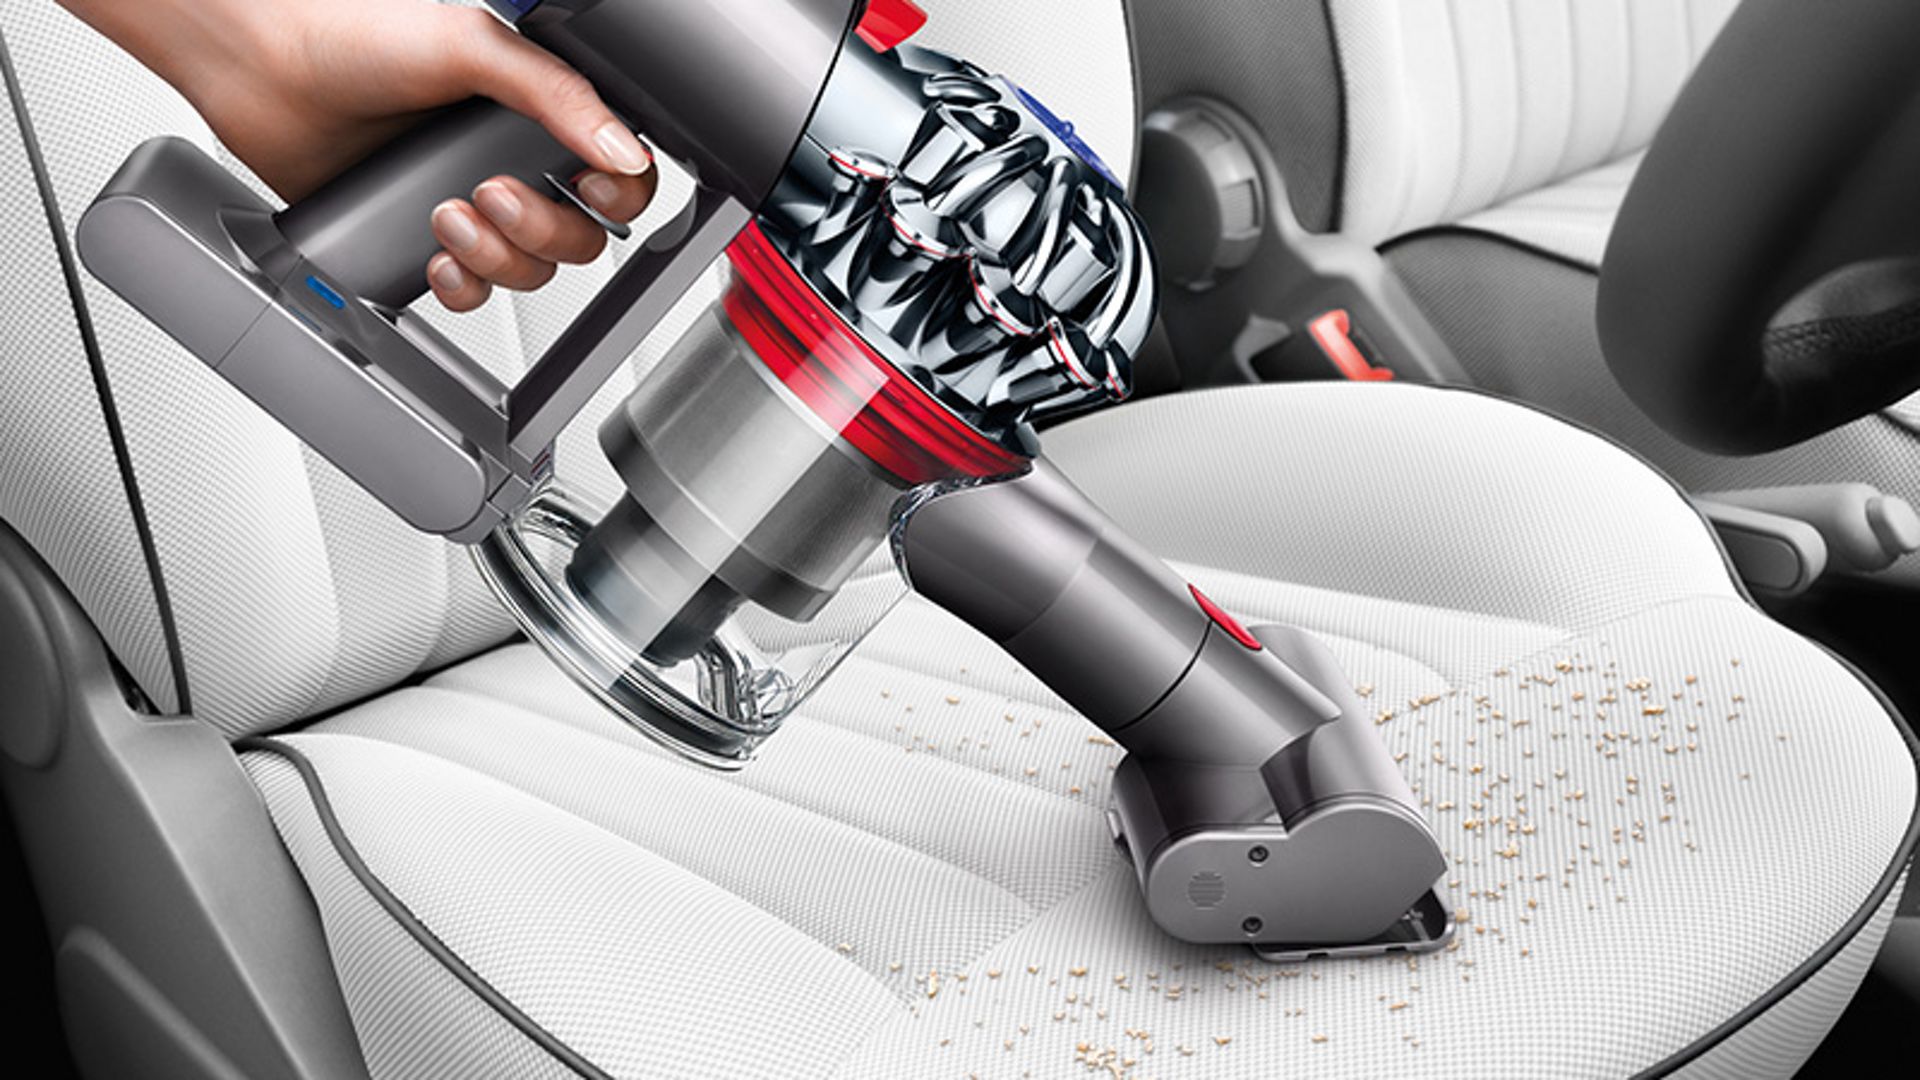 Using Dyson vacuum on car seat